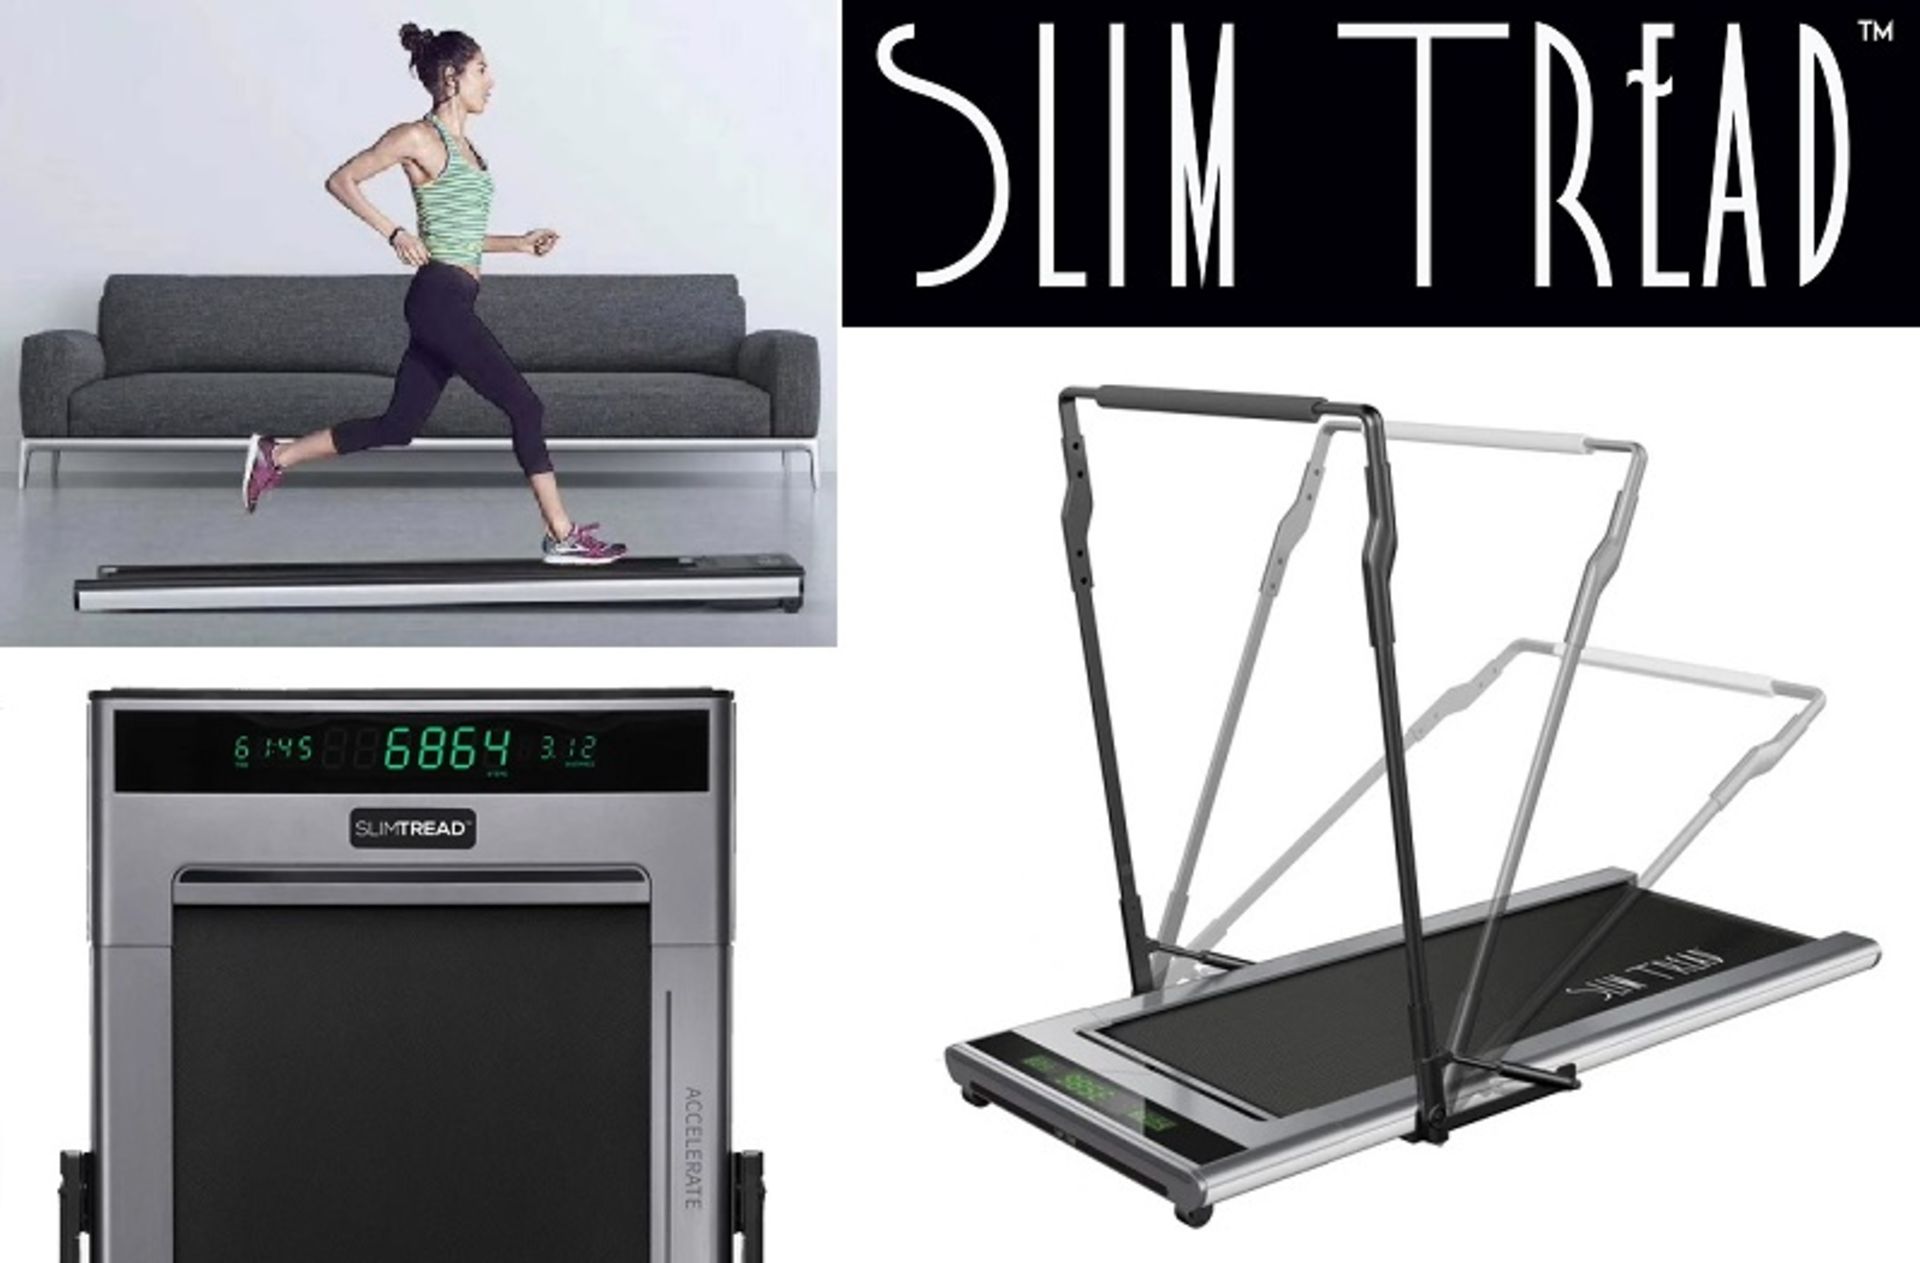 10 x Slim Tread Ultra Thin Smart Treadmill Running Machine - Brand New Sealed Stock - RRP £799 Each!